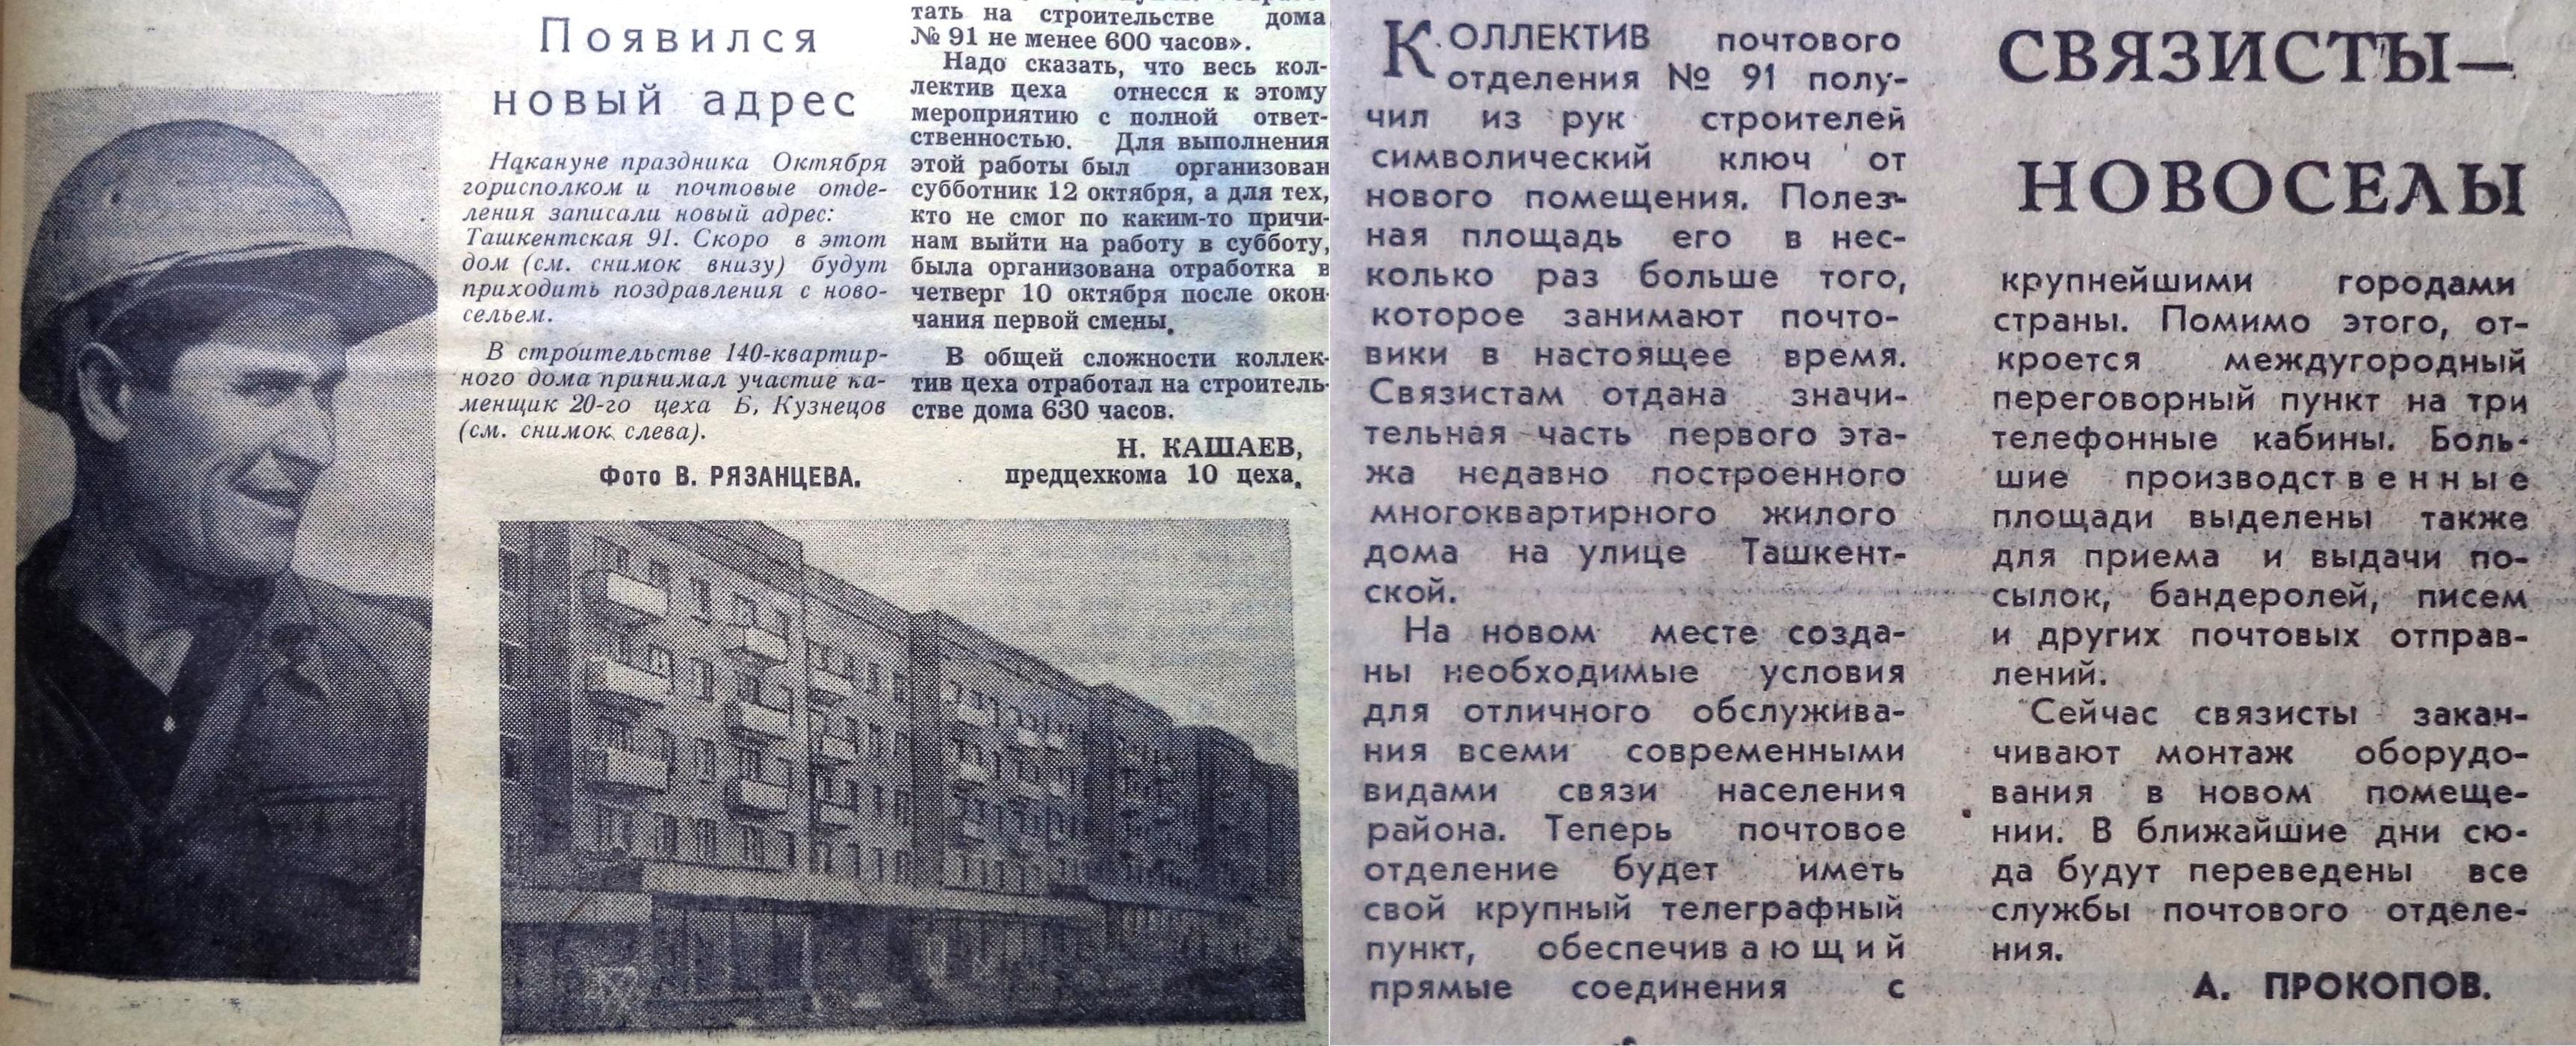 Ташкентская-ФОТО-31-Новатор-1974-13 ноября-min-min